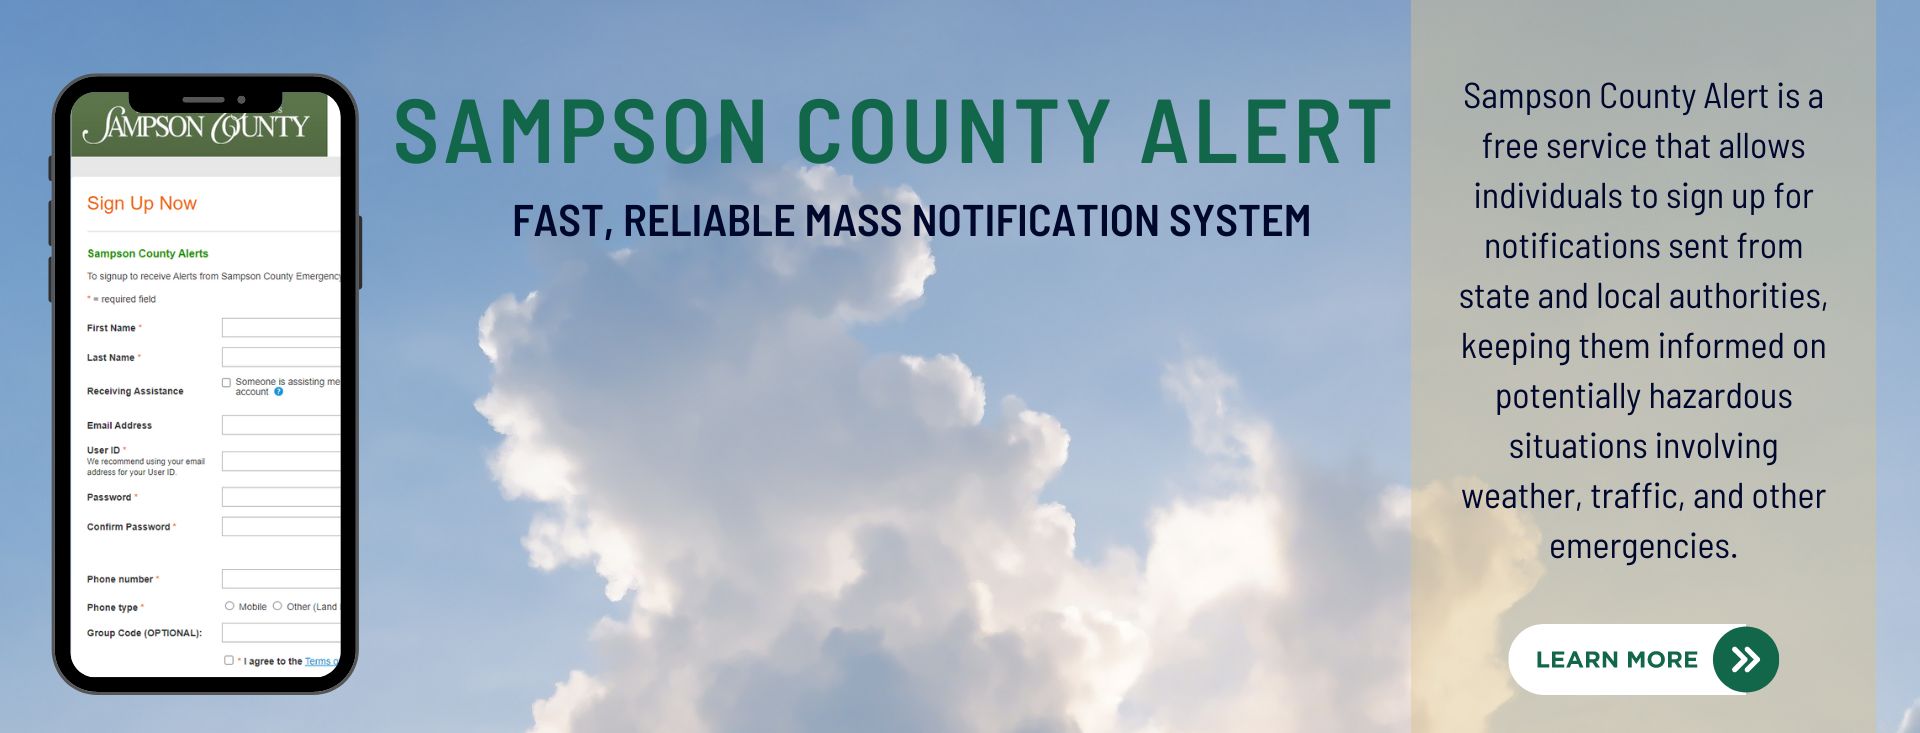 sampson county alert (1)